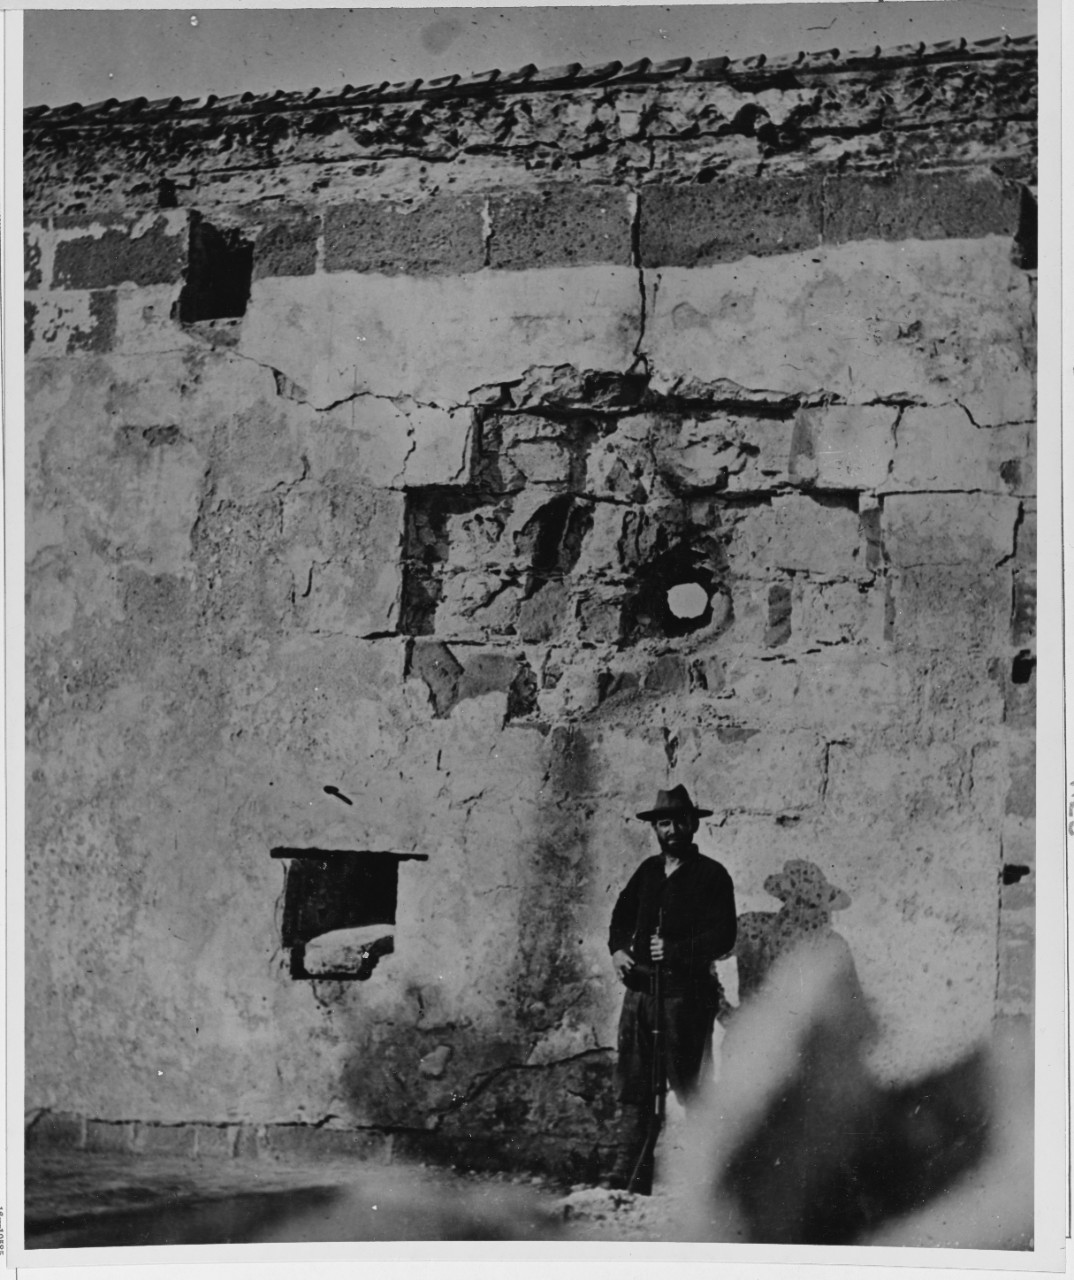 Photo #: USN 902954  Bombardment of Fort San Antonio de Abad, Malate, Philippines, 13 August 1898